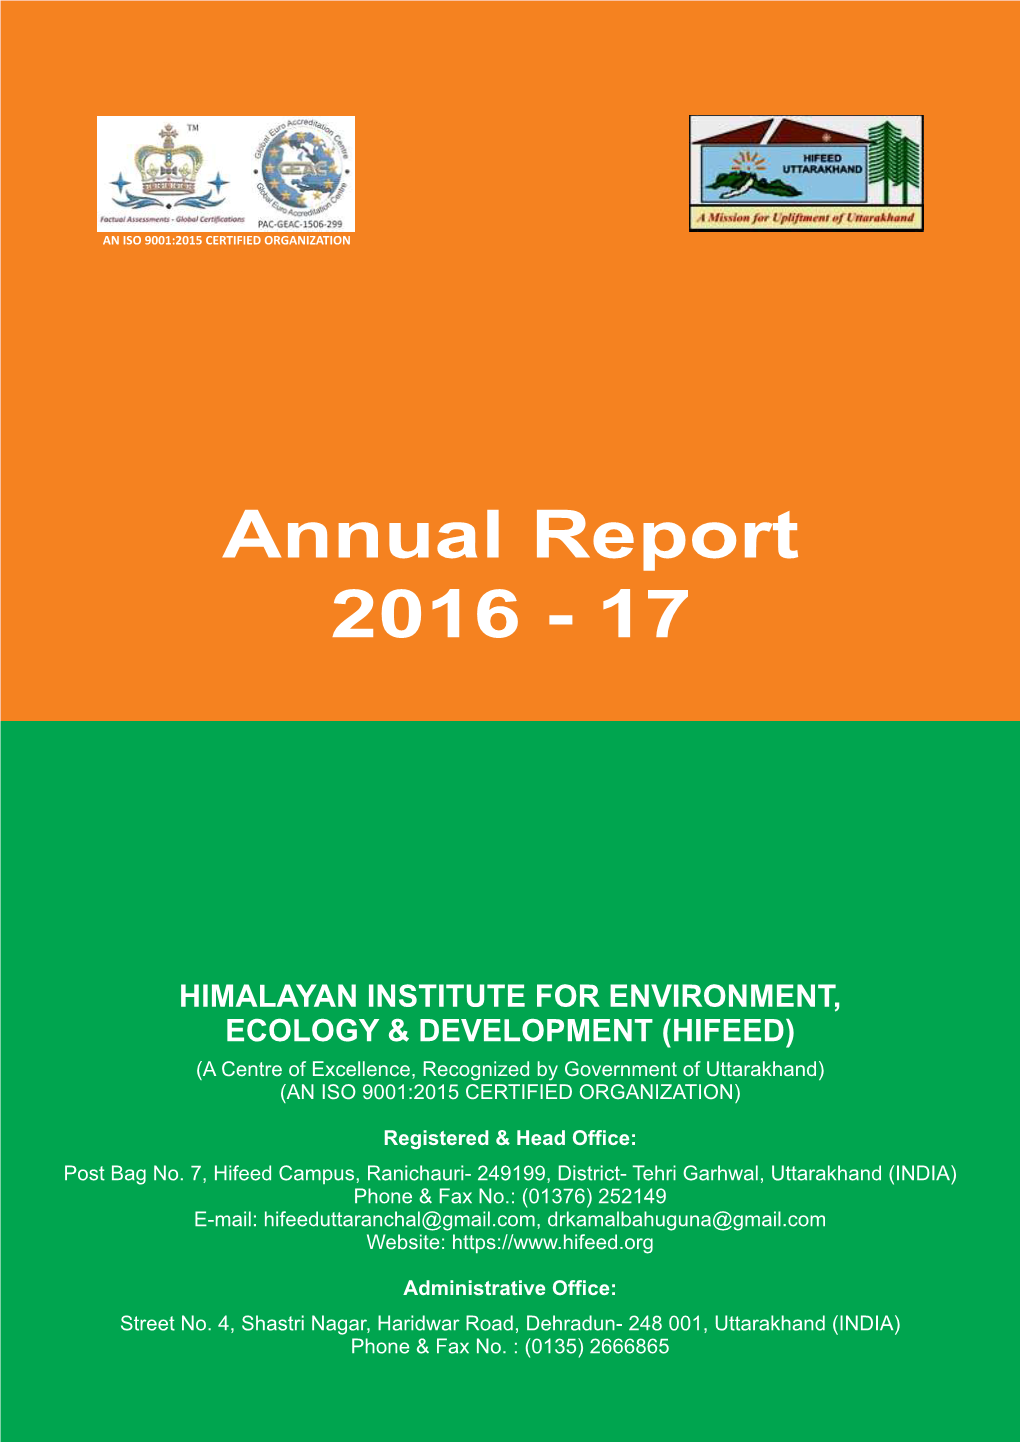 Annual Report, 2016-17